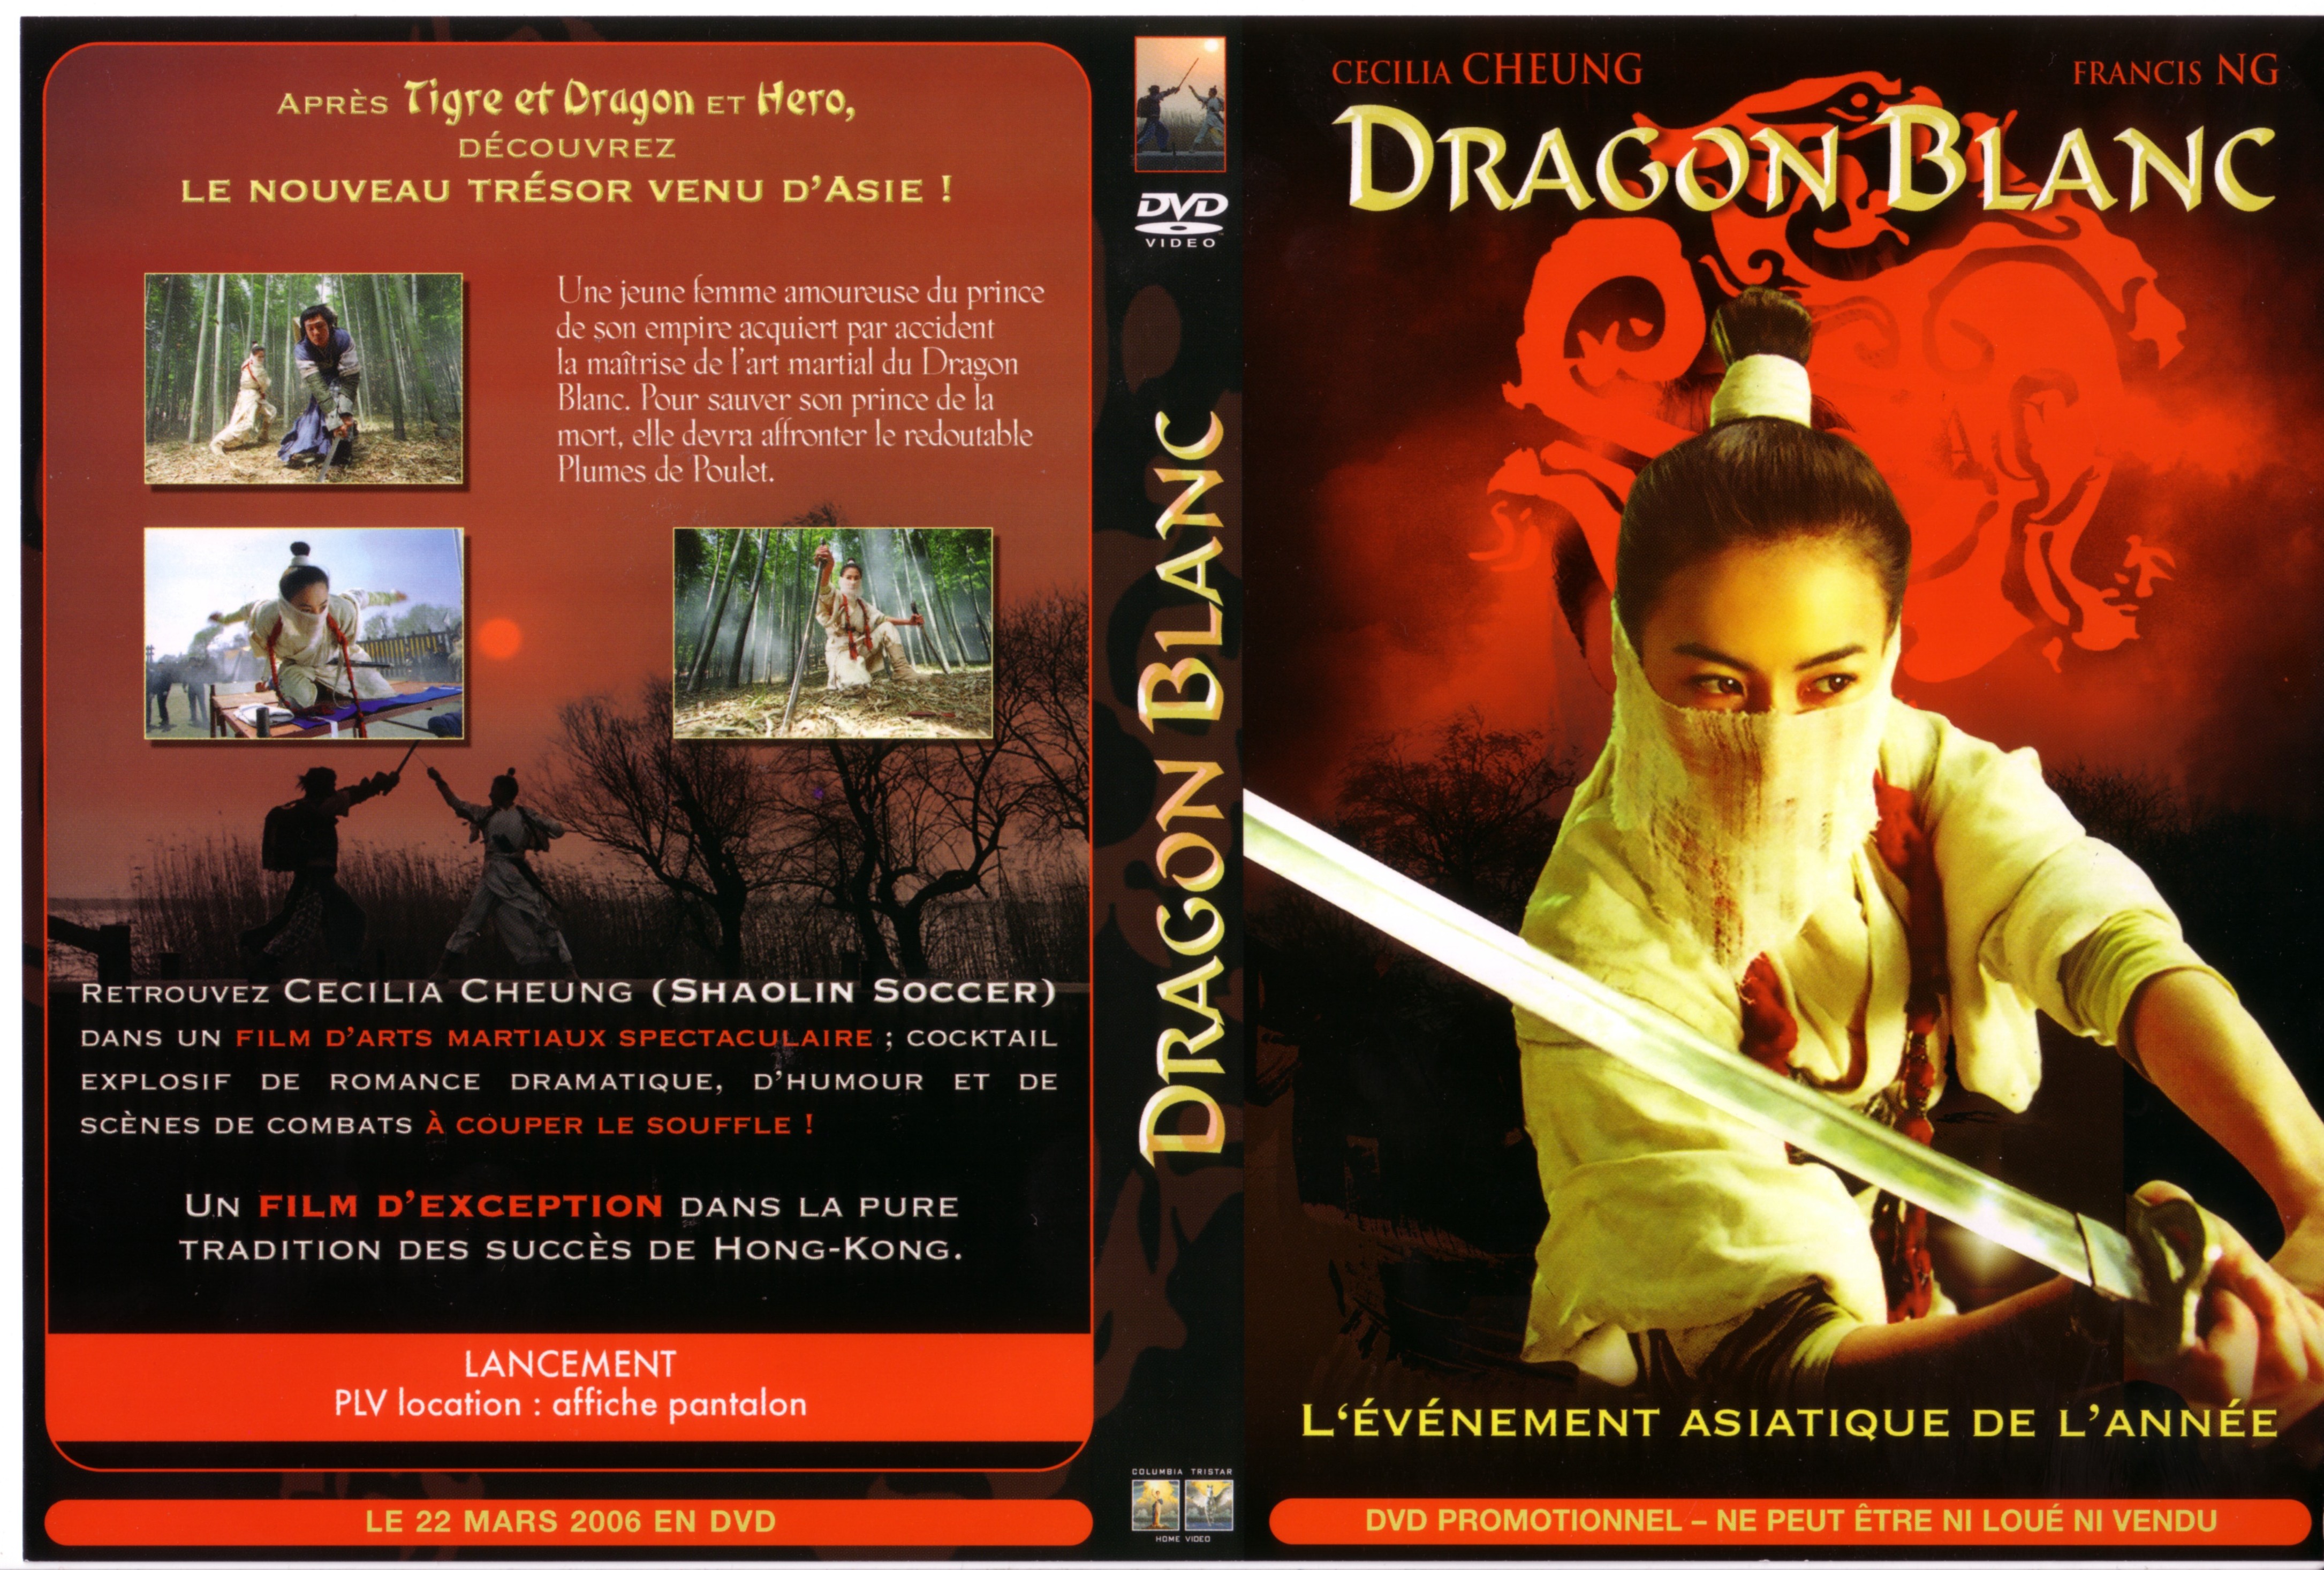 Jaquette DVD Dragon blanc v2